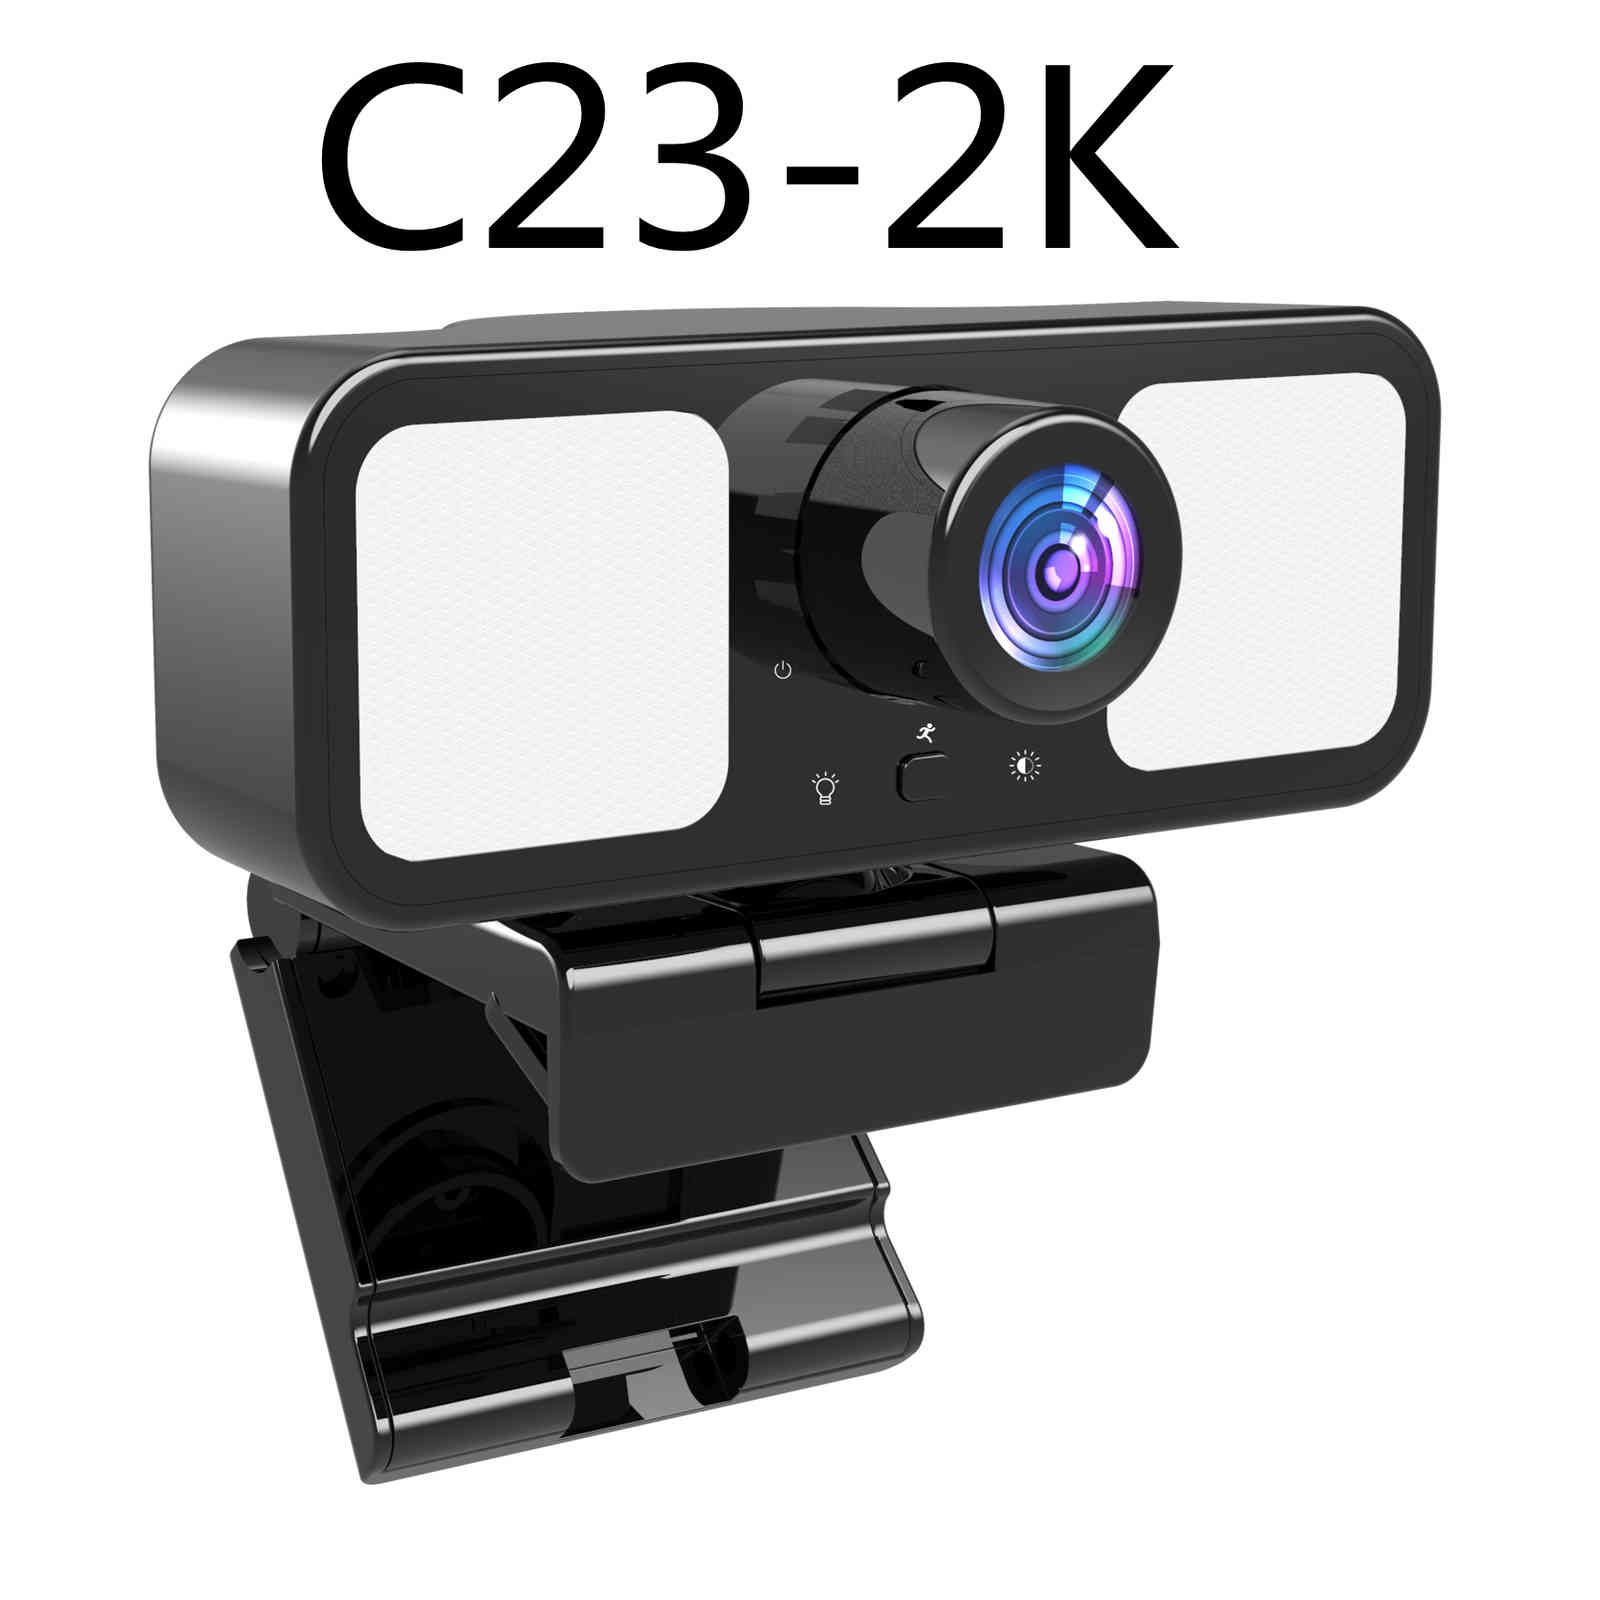 C23-2K.